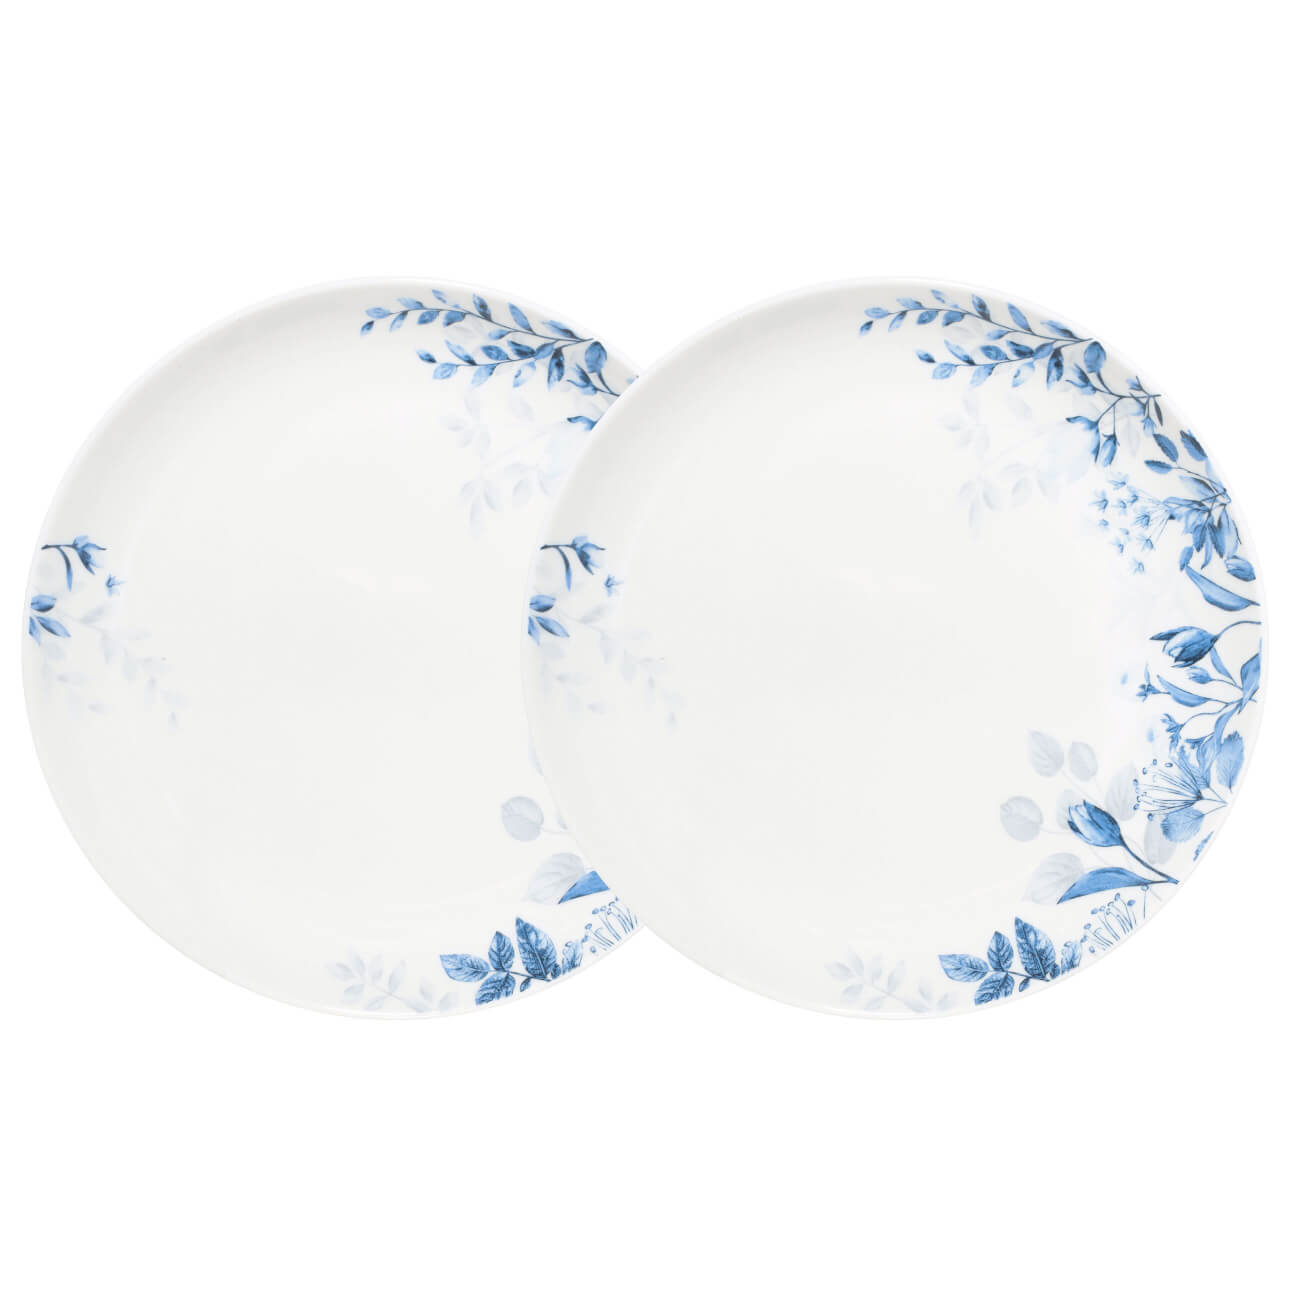 Тарелка закусочная, 21 см, 2 шт, фарфор N, белая, Синие цветы, Royal flower тарелка закусочная maxwell